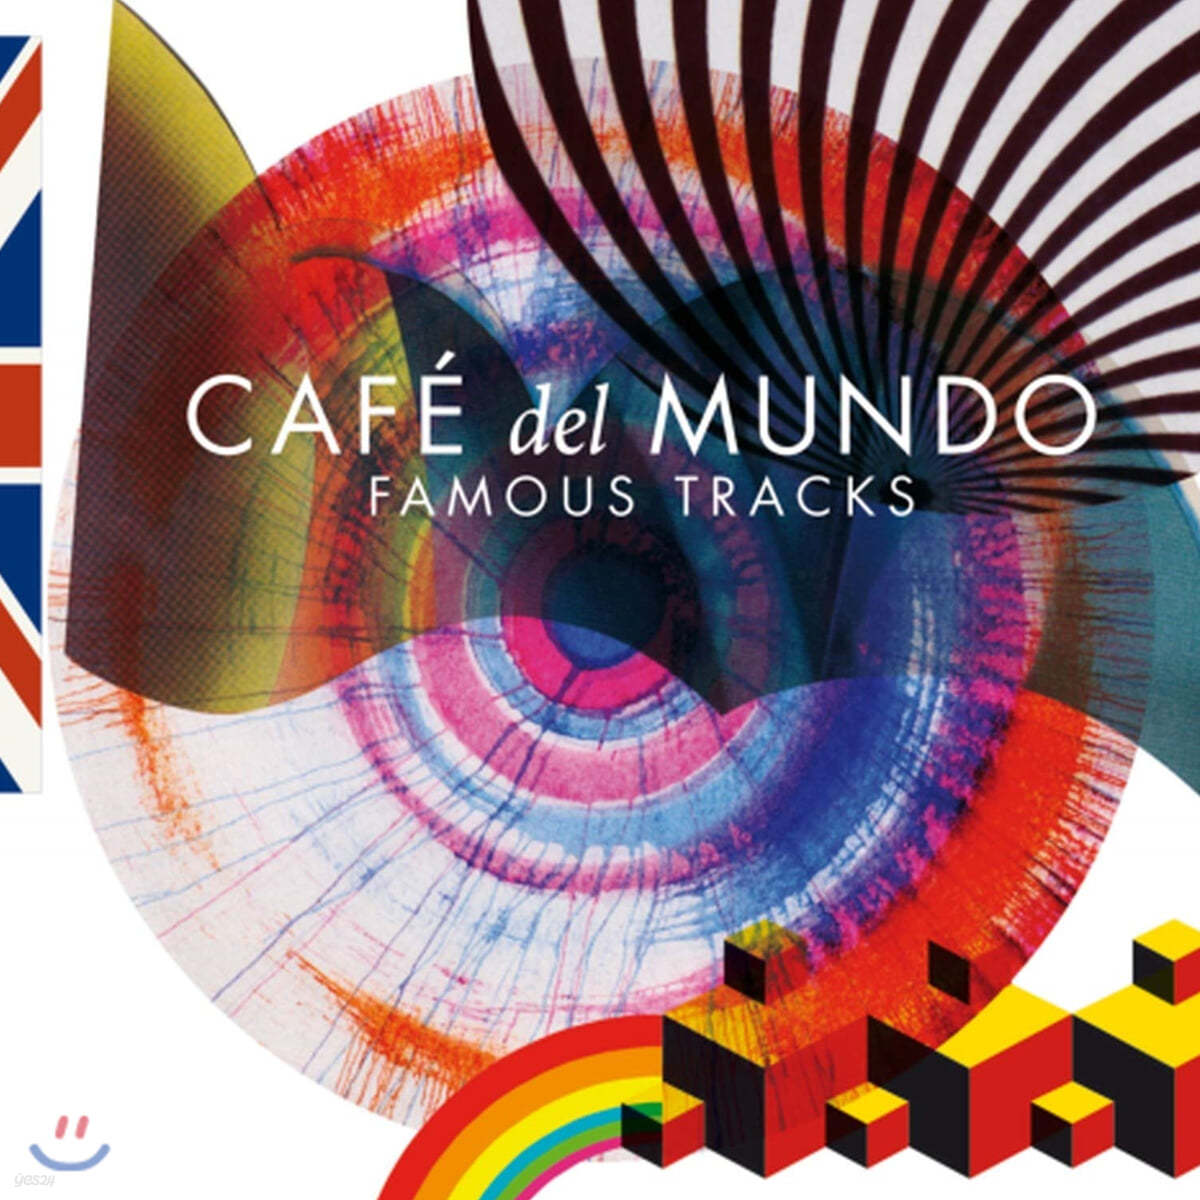 Cafe del Mundo (카페 델 문도) - Famous Tracks